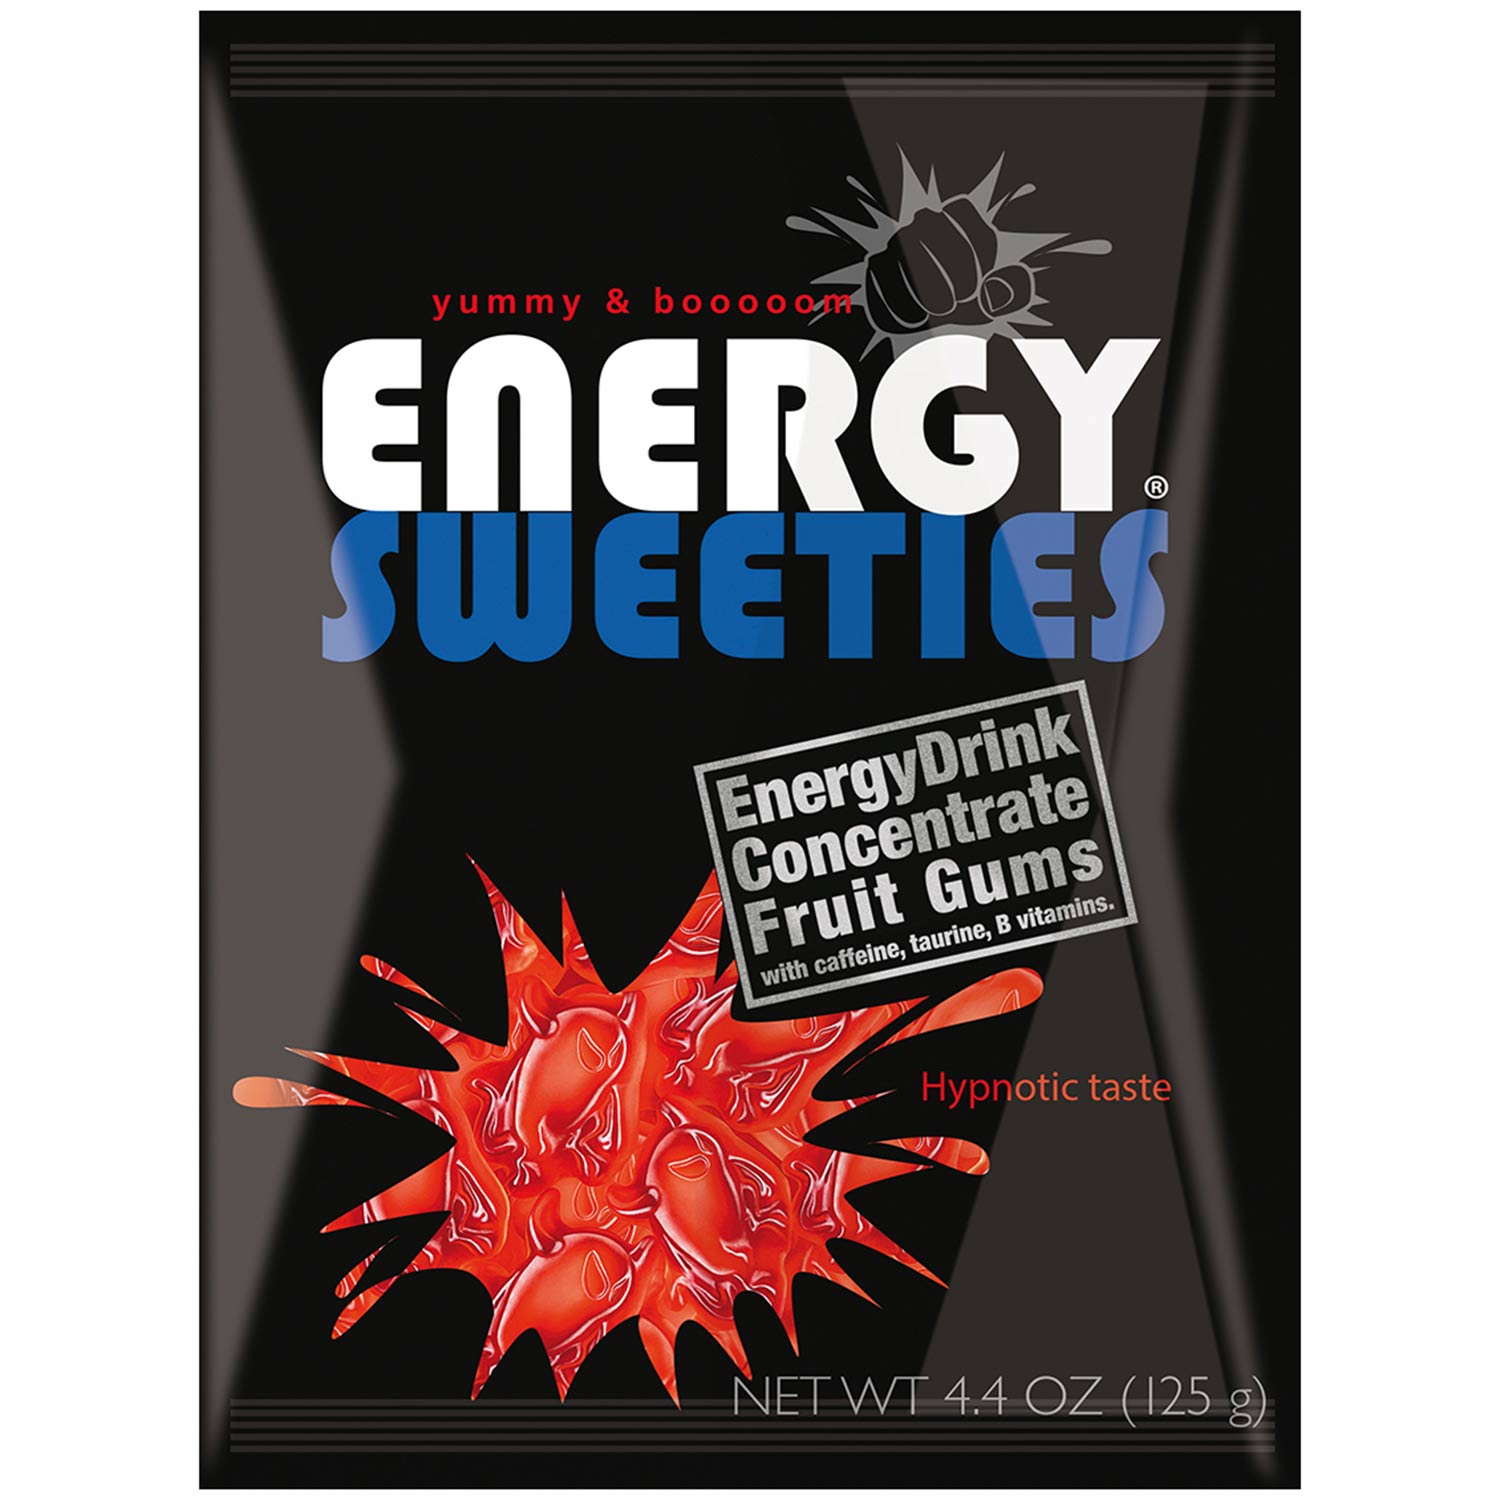 Jeleuri gumate energizante Hypnotic taste, 125 g, Energy Sweeties